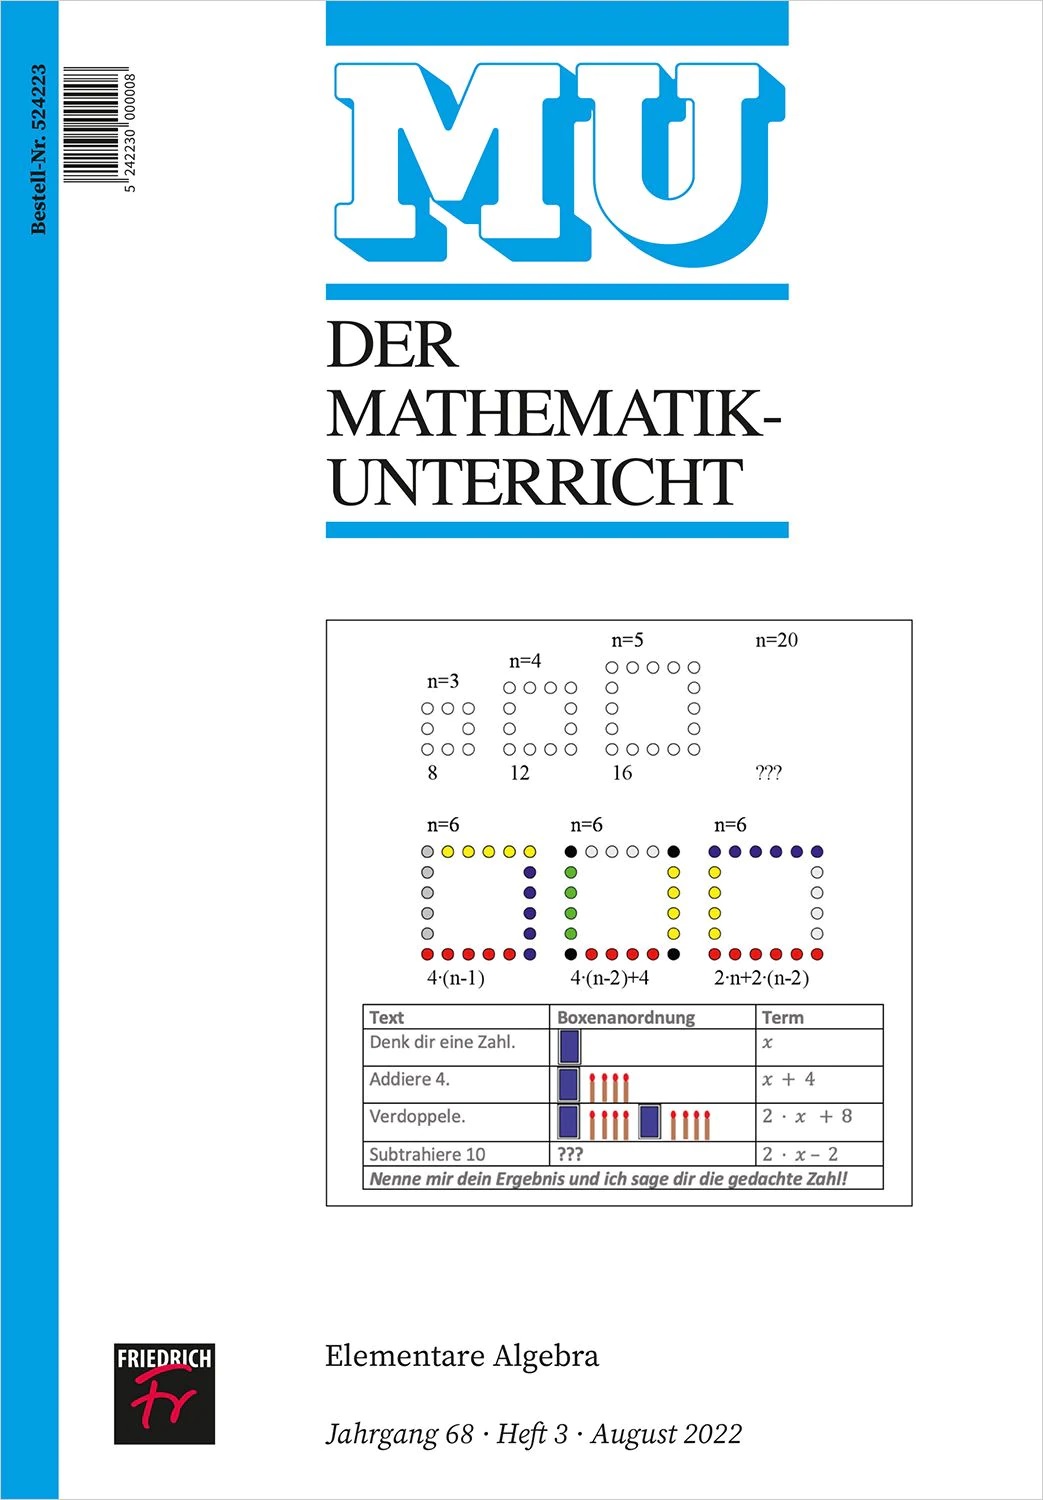 Der Mathematikunterricht, 68. Jahrgang, Heft 3